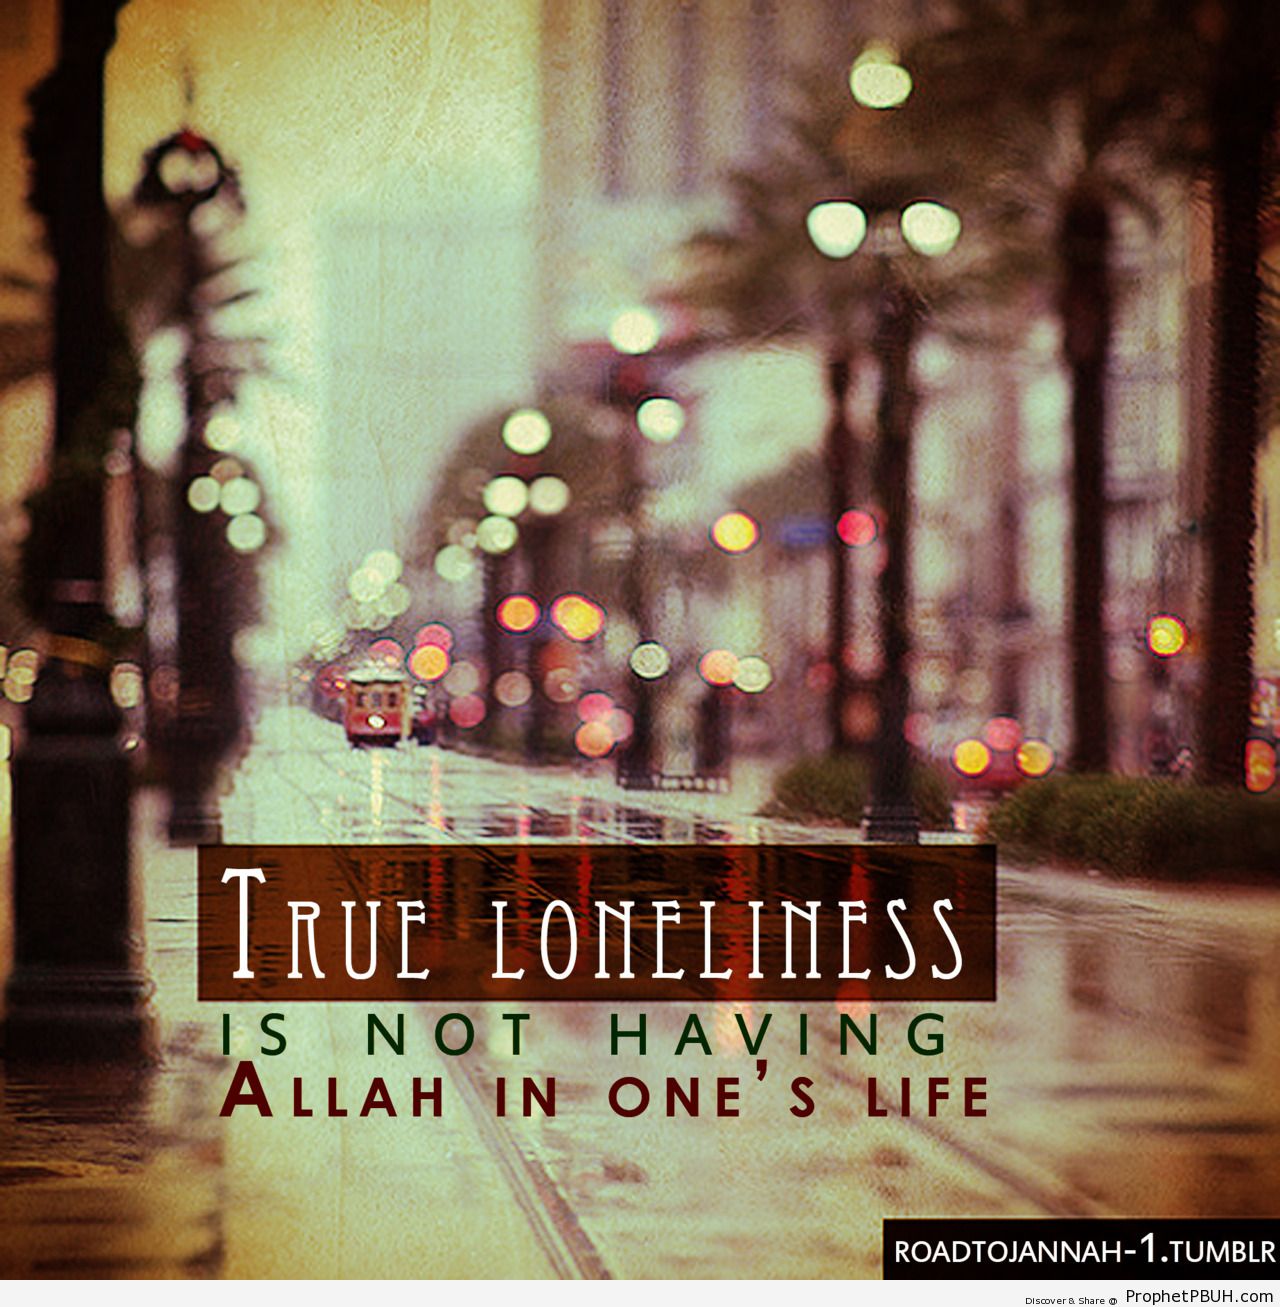 True loneliness - Islamic Quotes, Hadiths, Duas